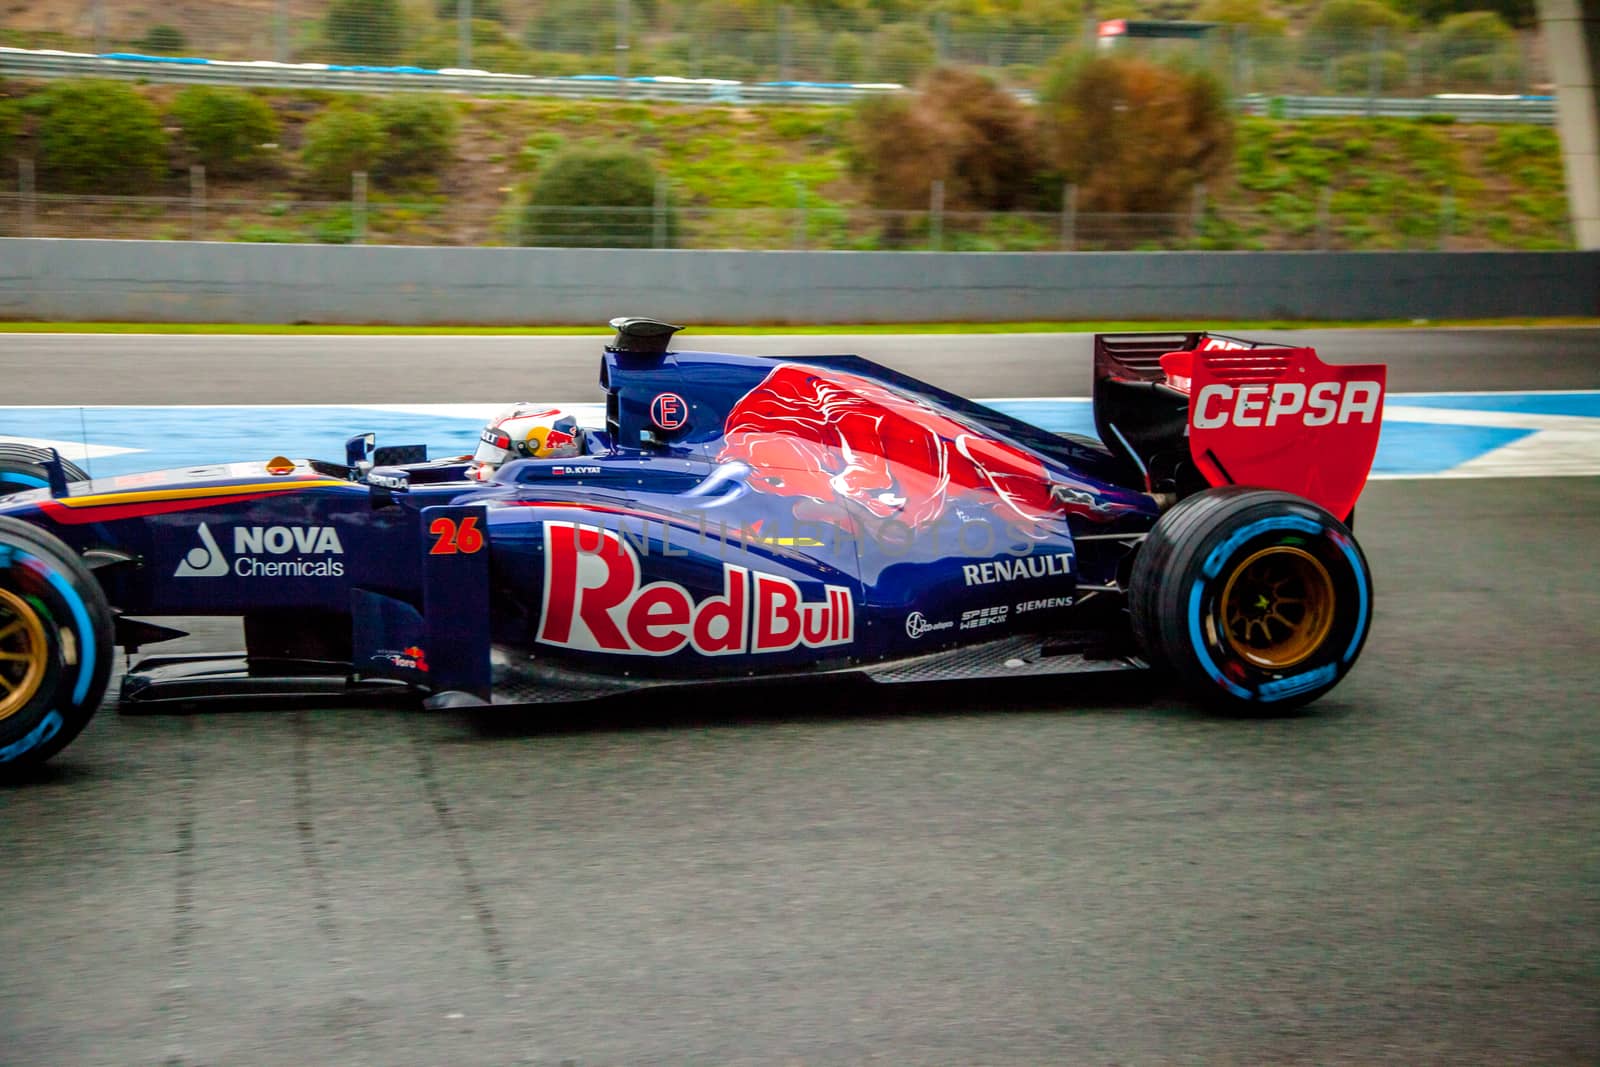 Team Toro Rosso F1, Daniil Kvyat, 2014 by viledevil